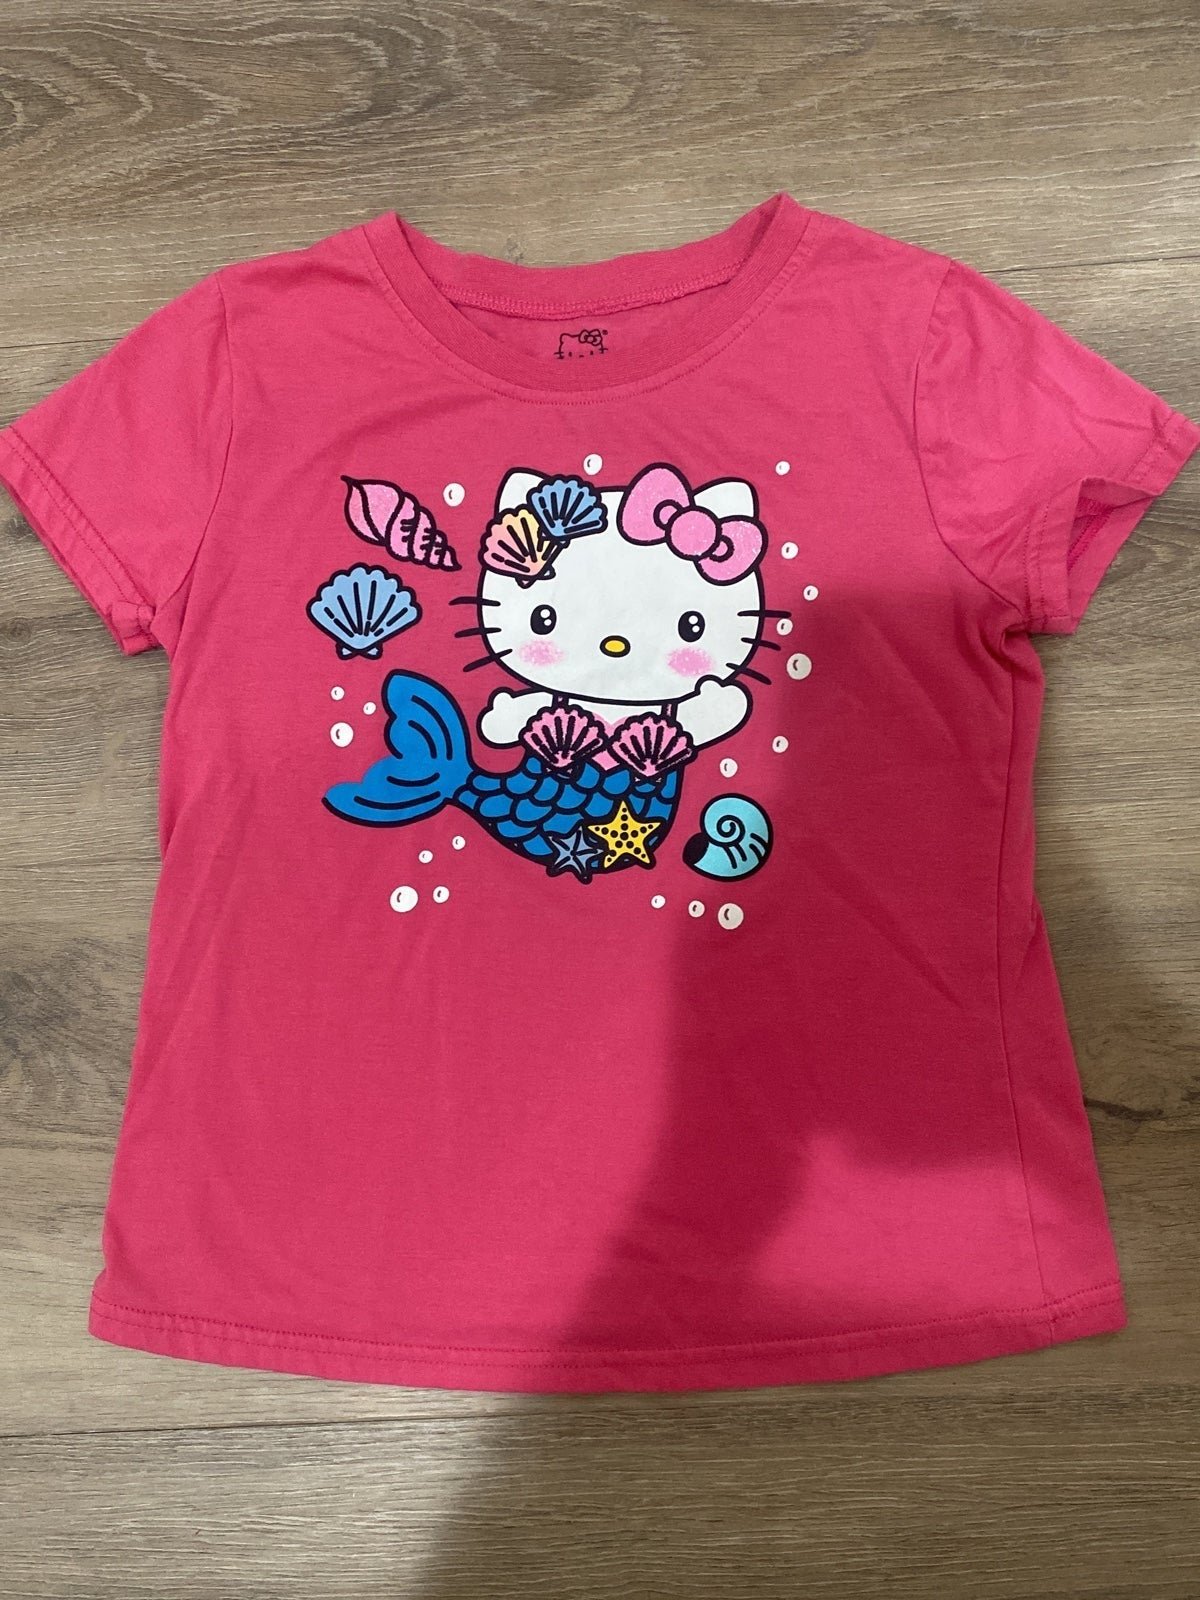 The Best Seller Hello Kitty Mermaid Pink Shirt IgCCFsgG2 best sale